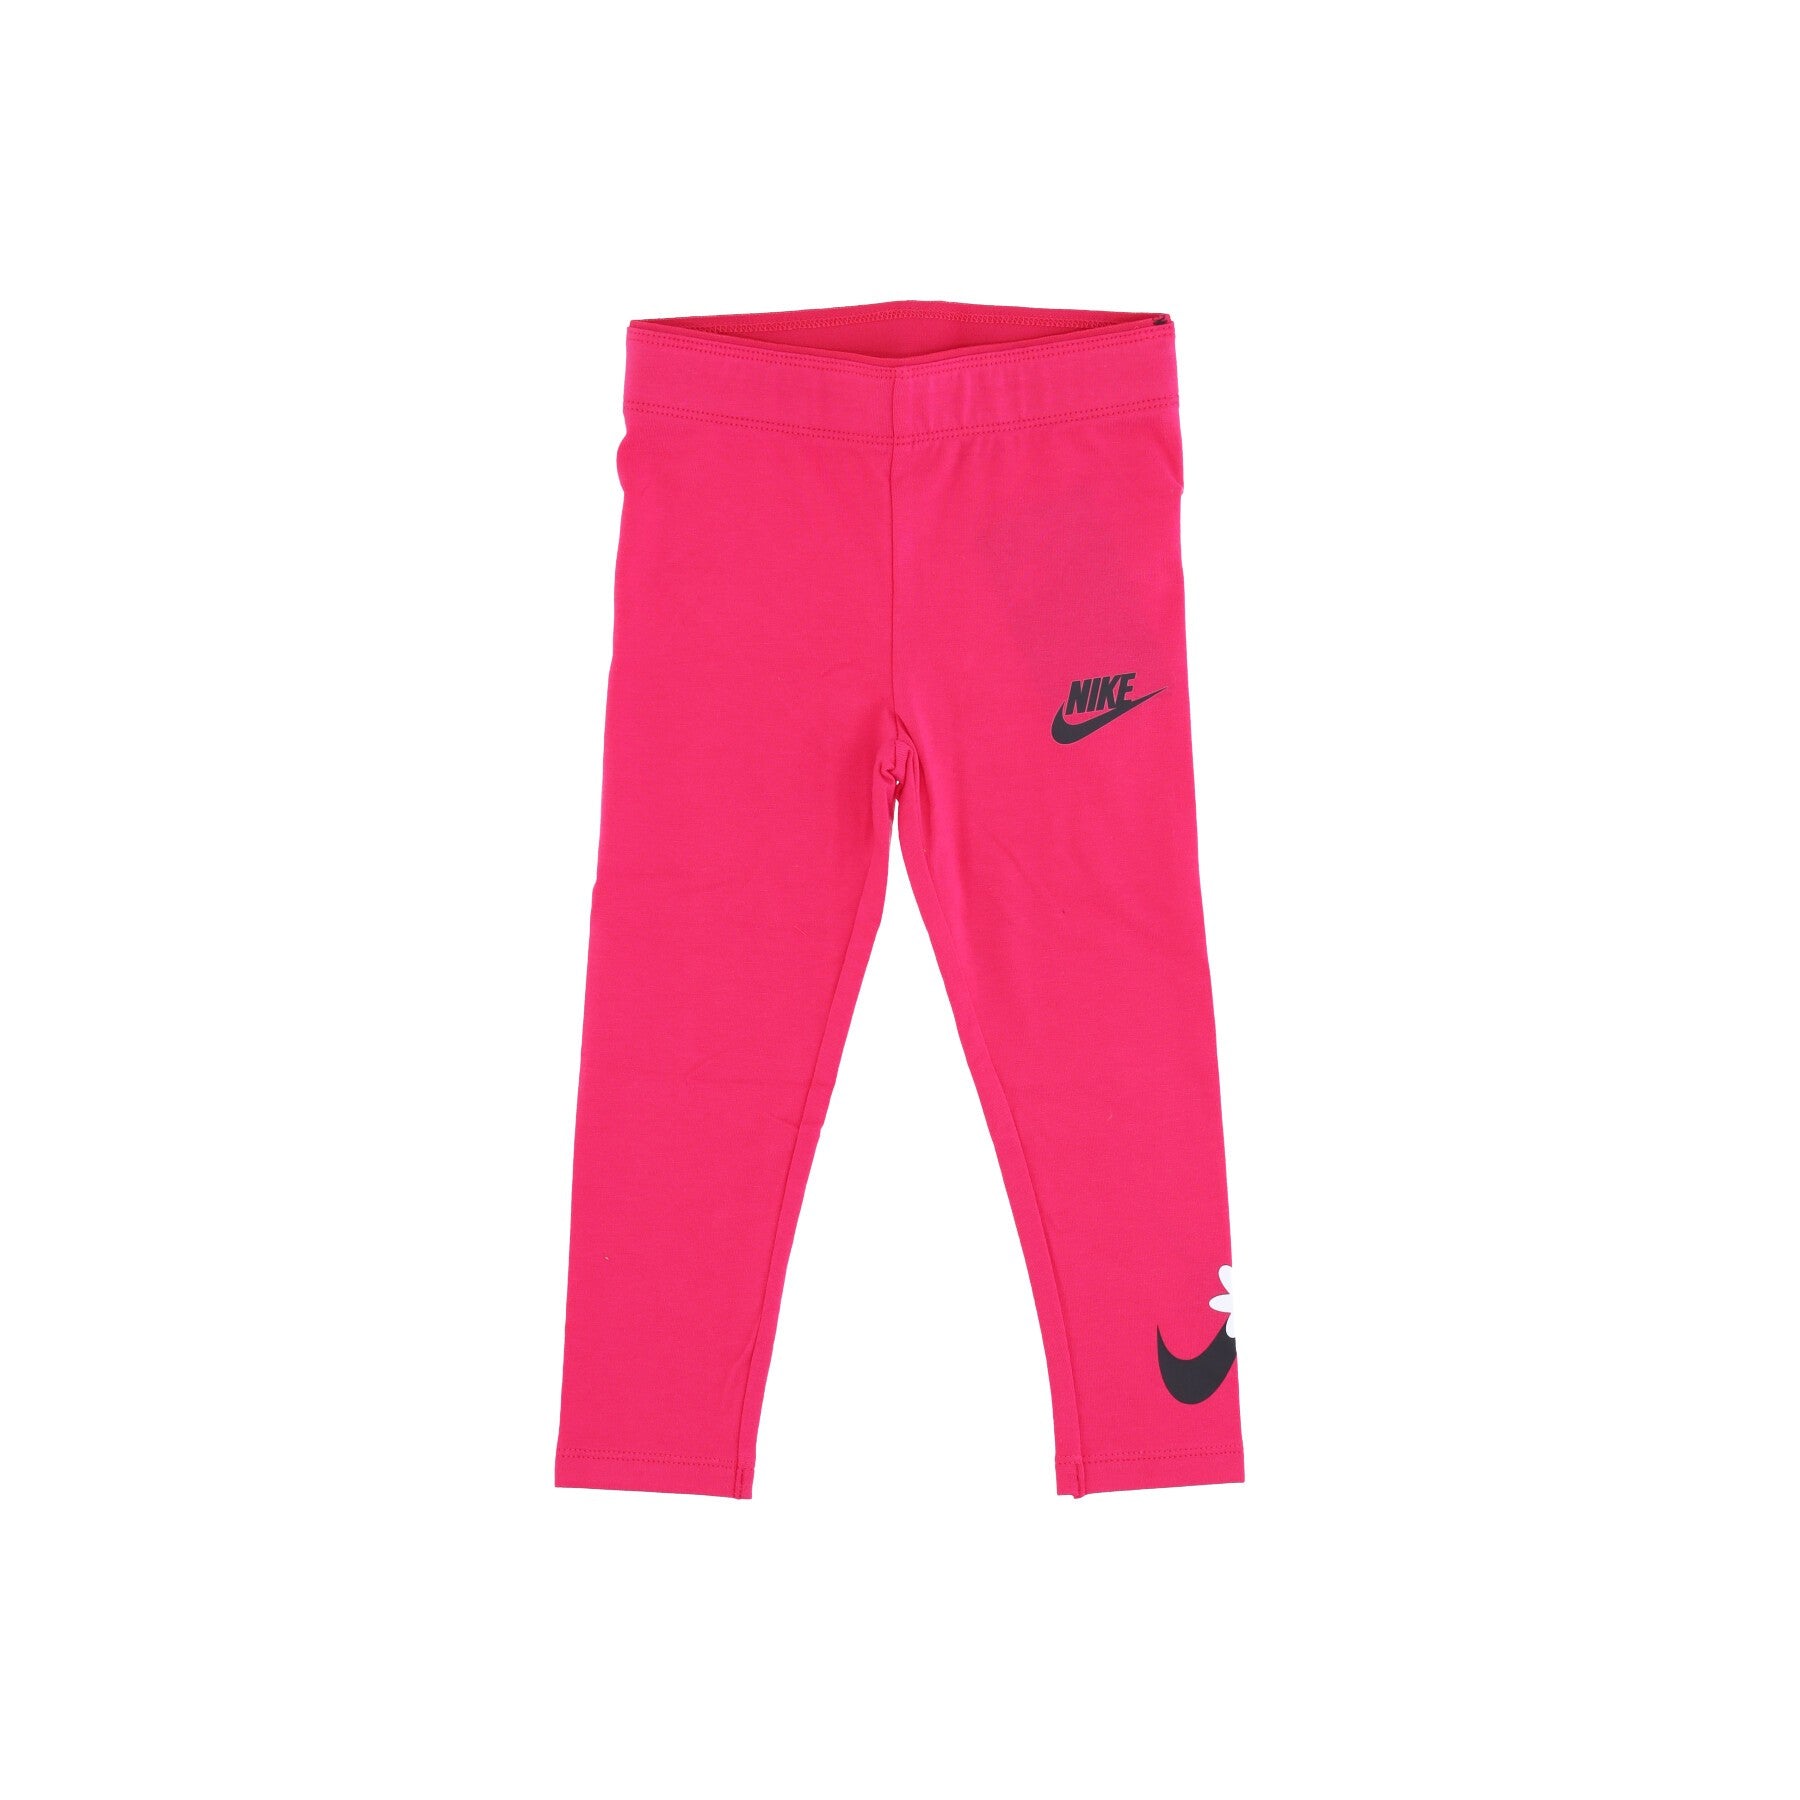 Nike, Leggins Bambina Sport Daisy Legging, Rush Pink